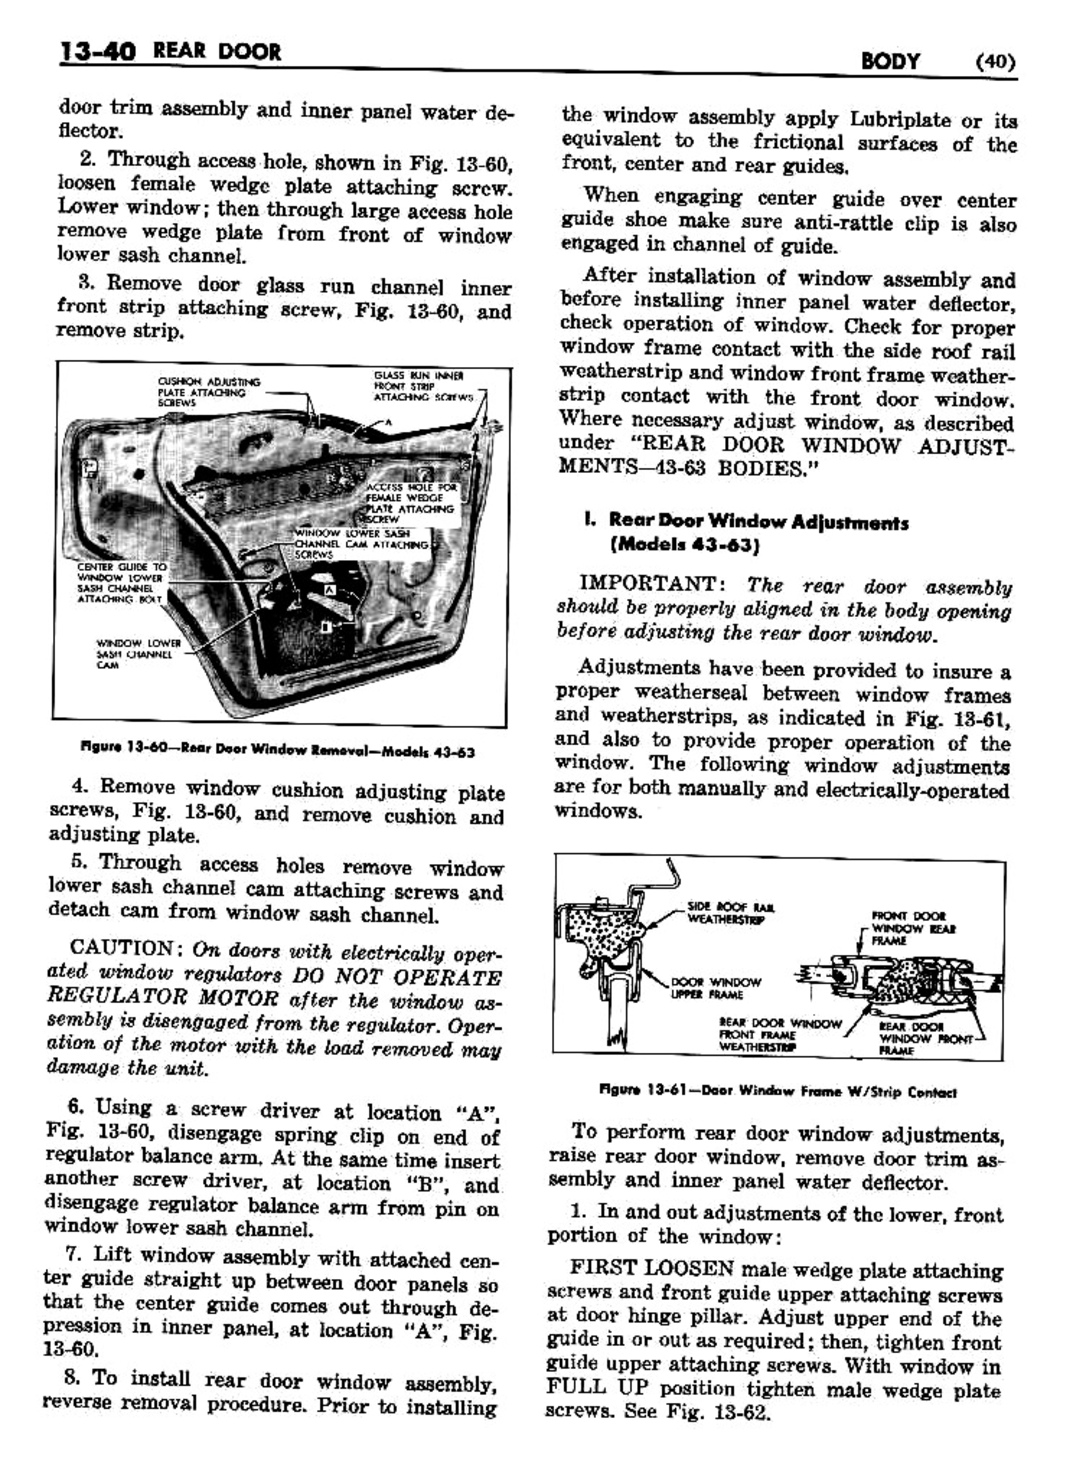 n_1957 Buick Body Service Manual-042-042.jpg